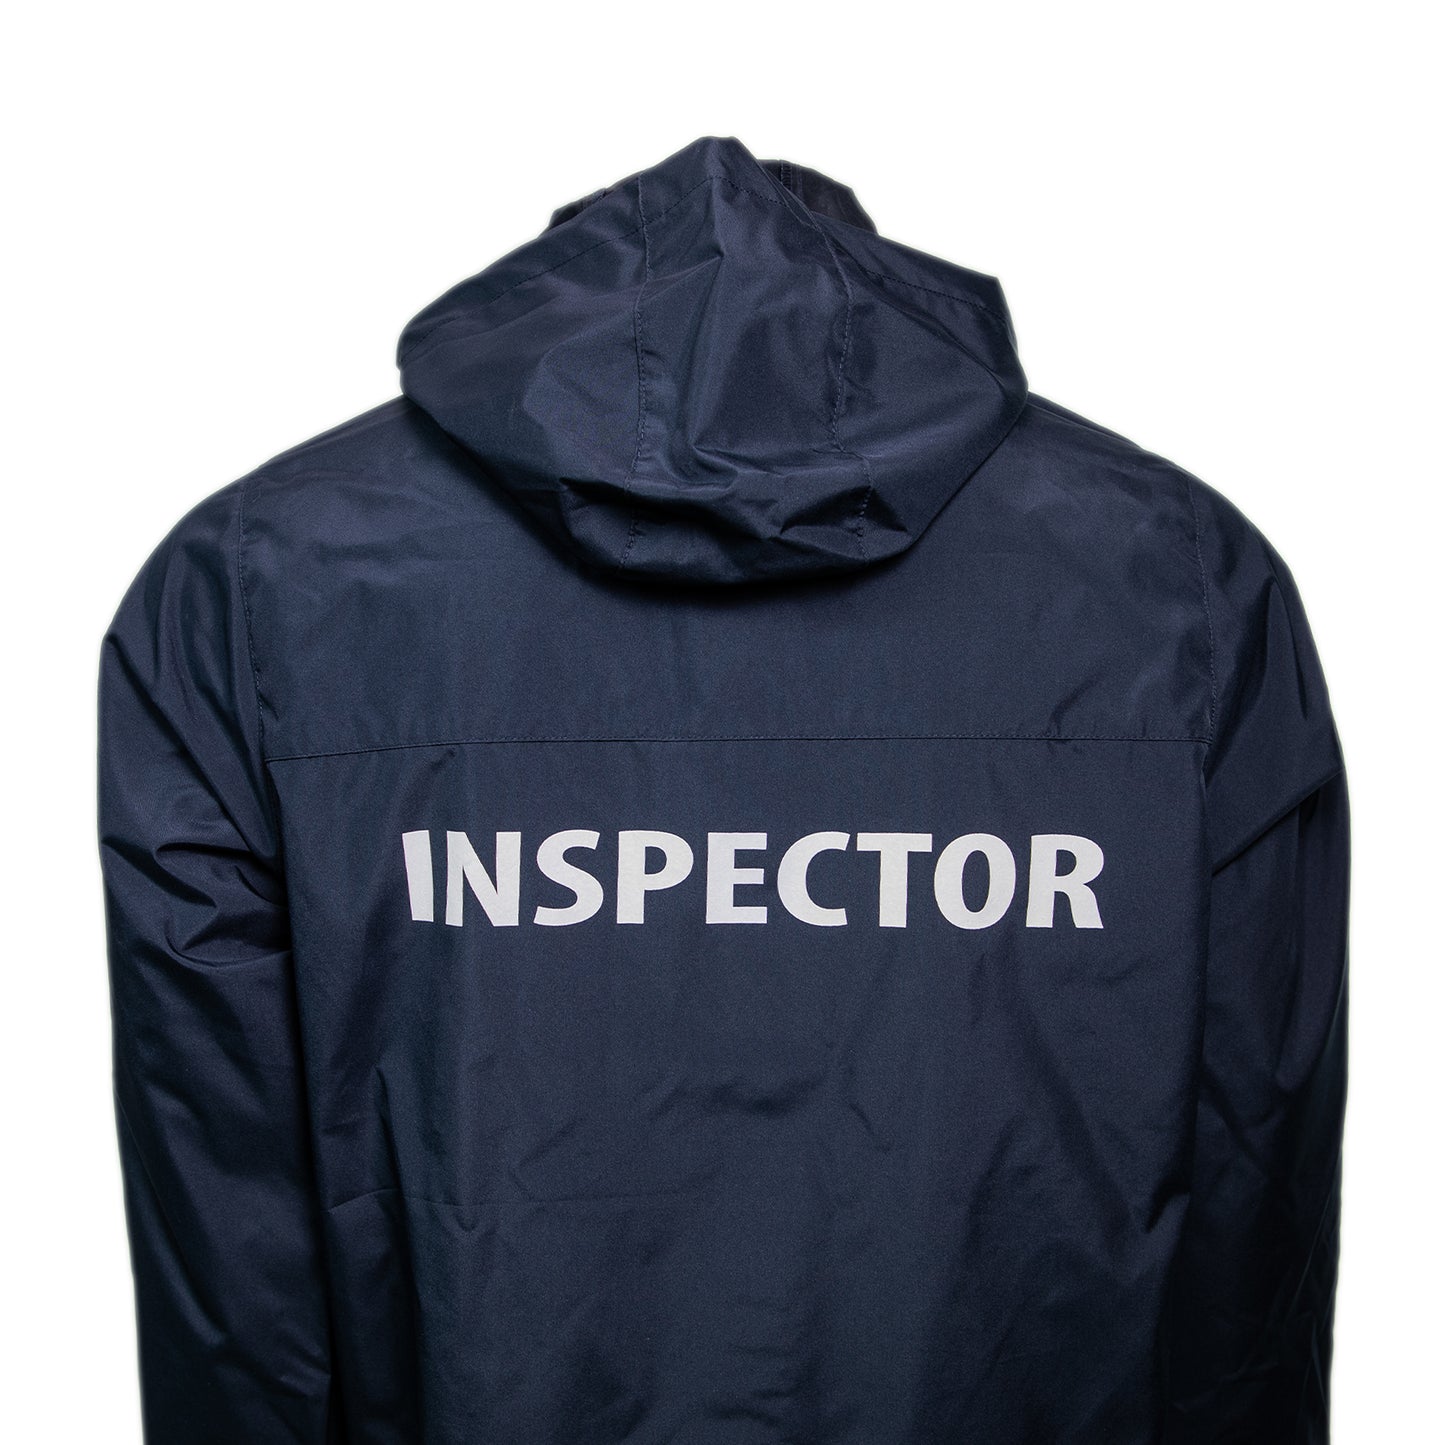 InterNACHI® “INSPECTOR” Jacket